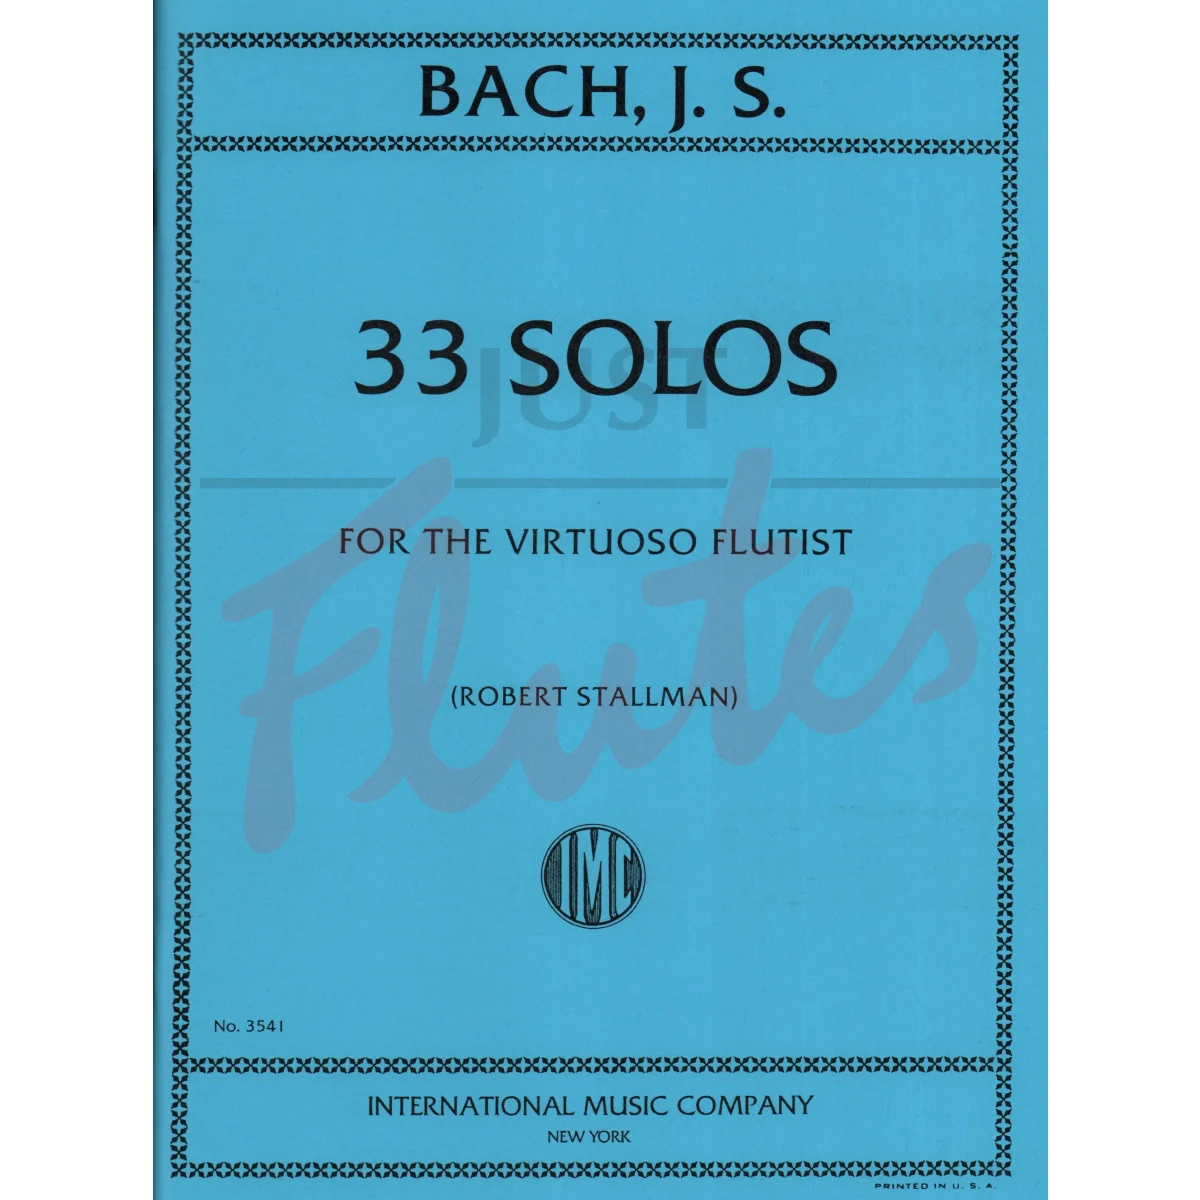 33 Solos for the Virtuoso Flutist